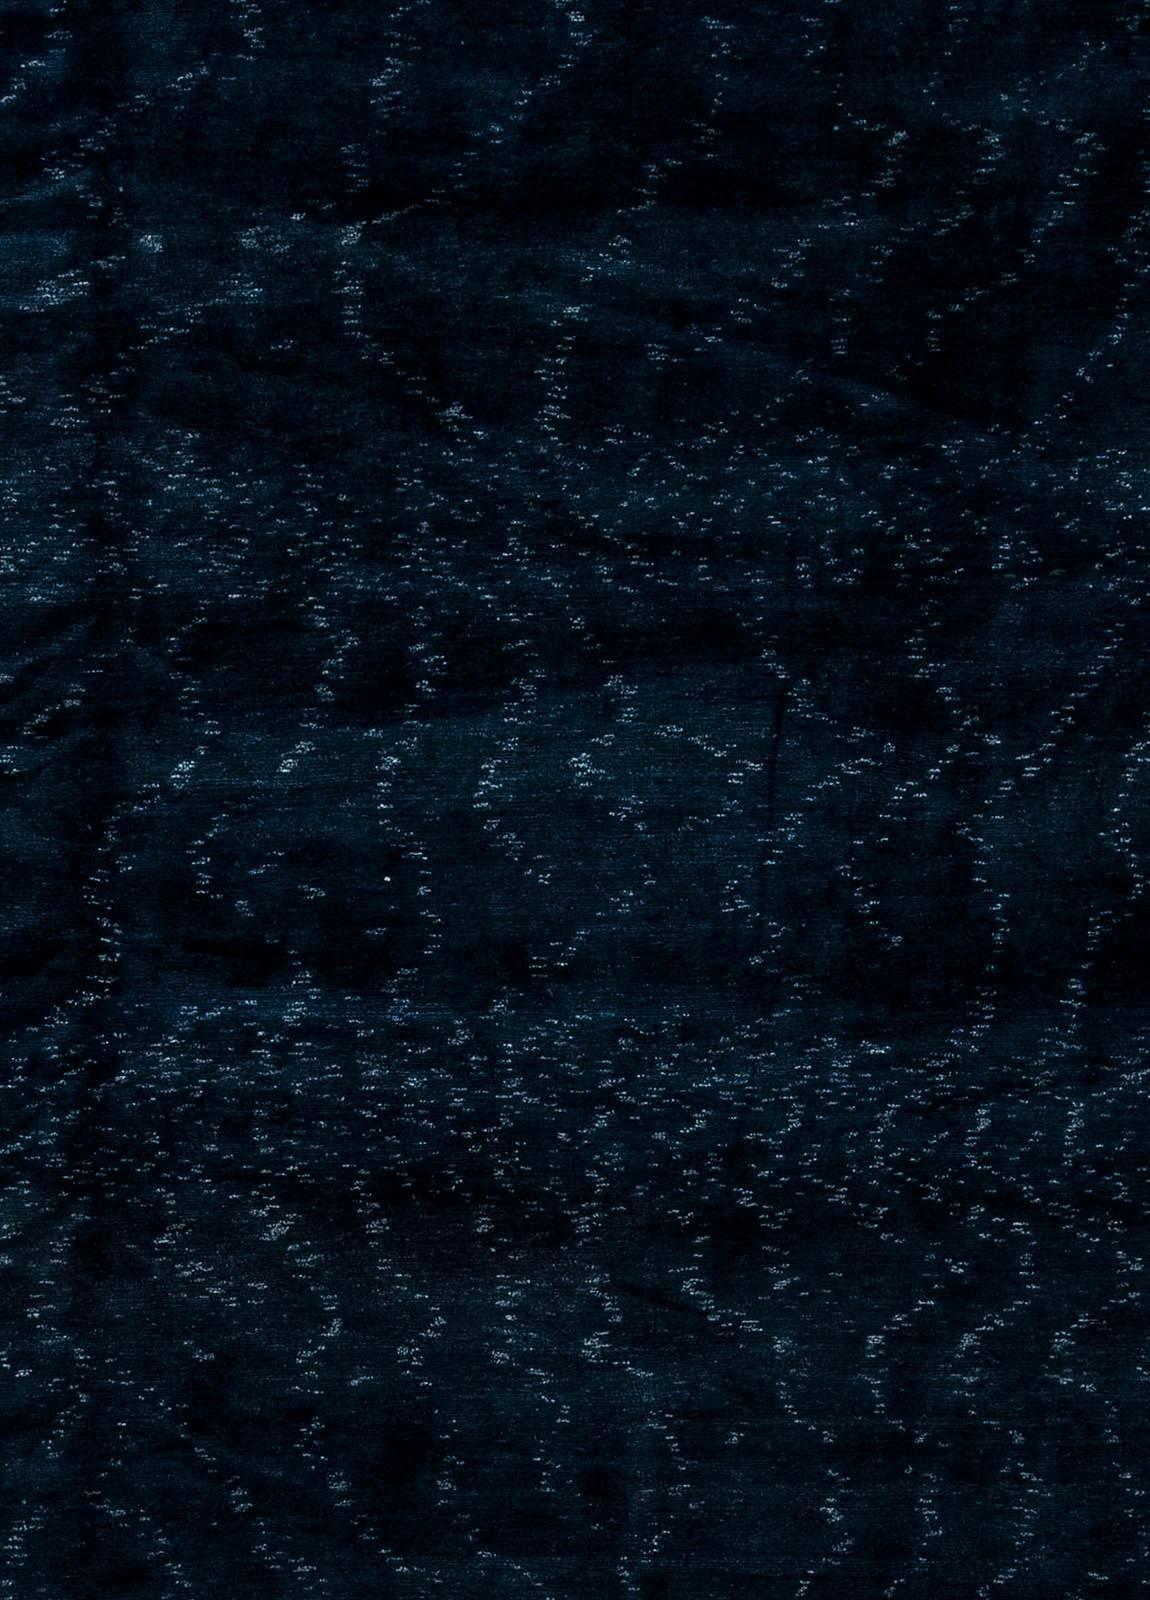 High-quality contemporary midnight blue handmade rug by Doris Leslie Blau
Size: 16'0